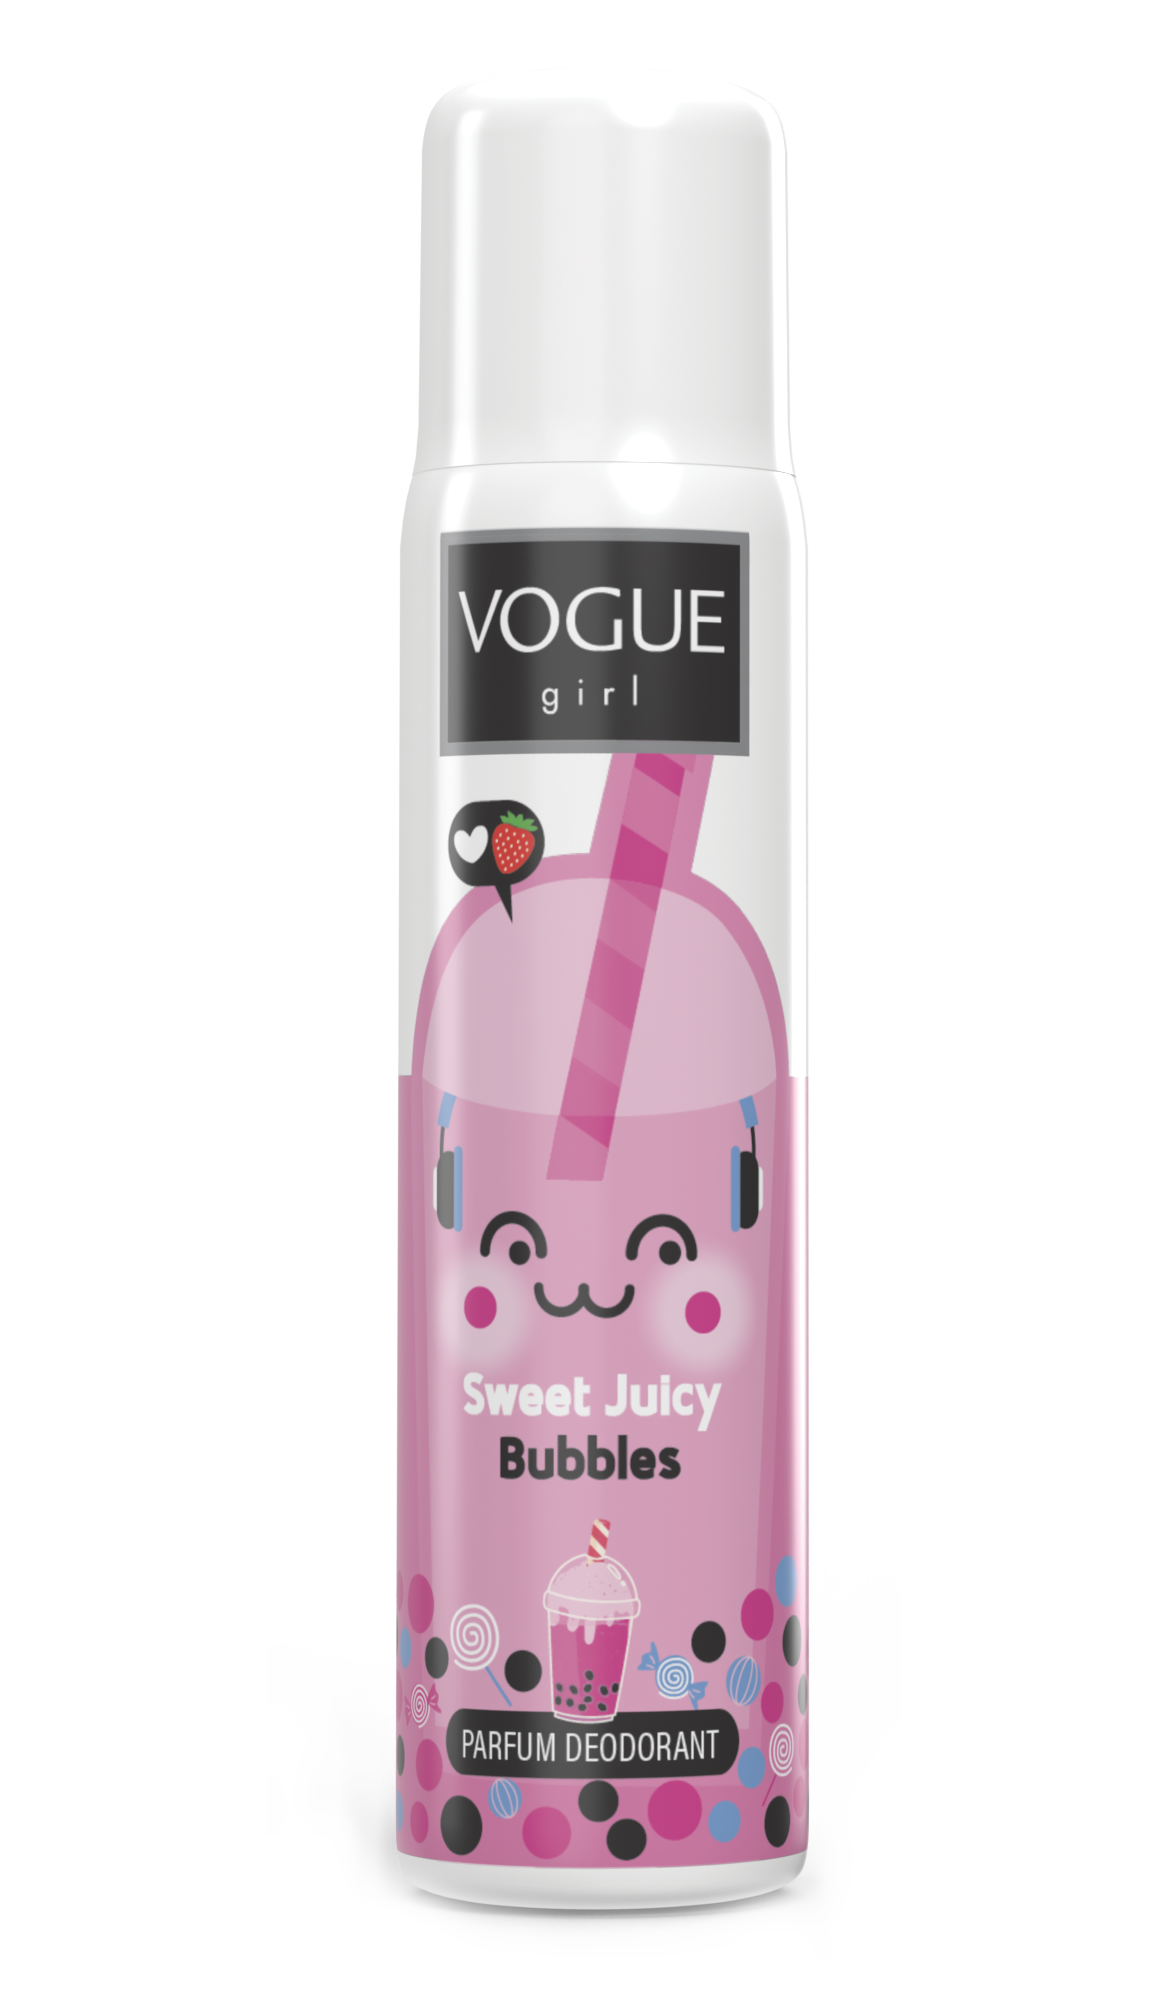 erfaring Kilimanjaro sensor Vogue Girl Sweet Juicy Bubbles Parfum Deodorant | Vogue Girl